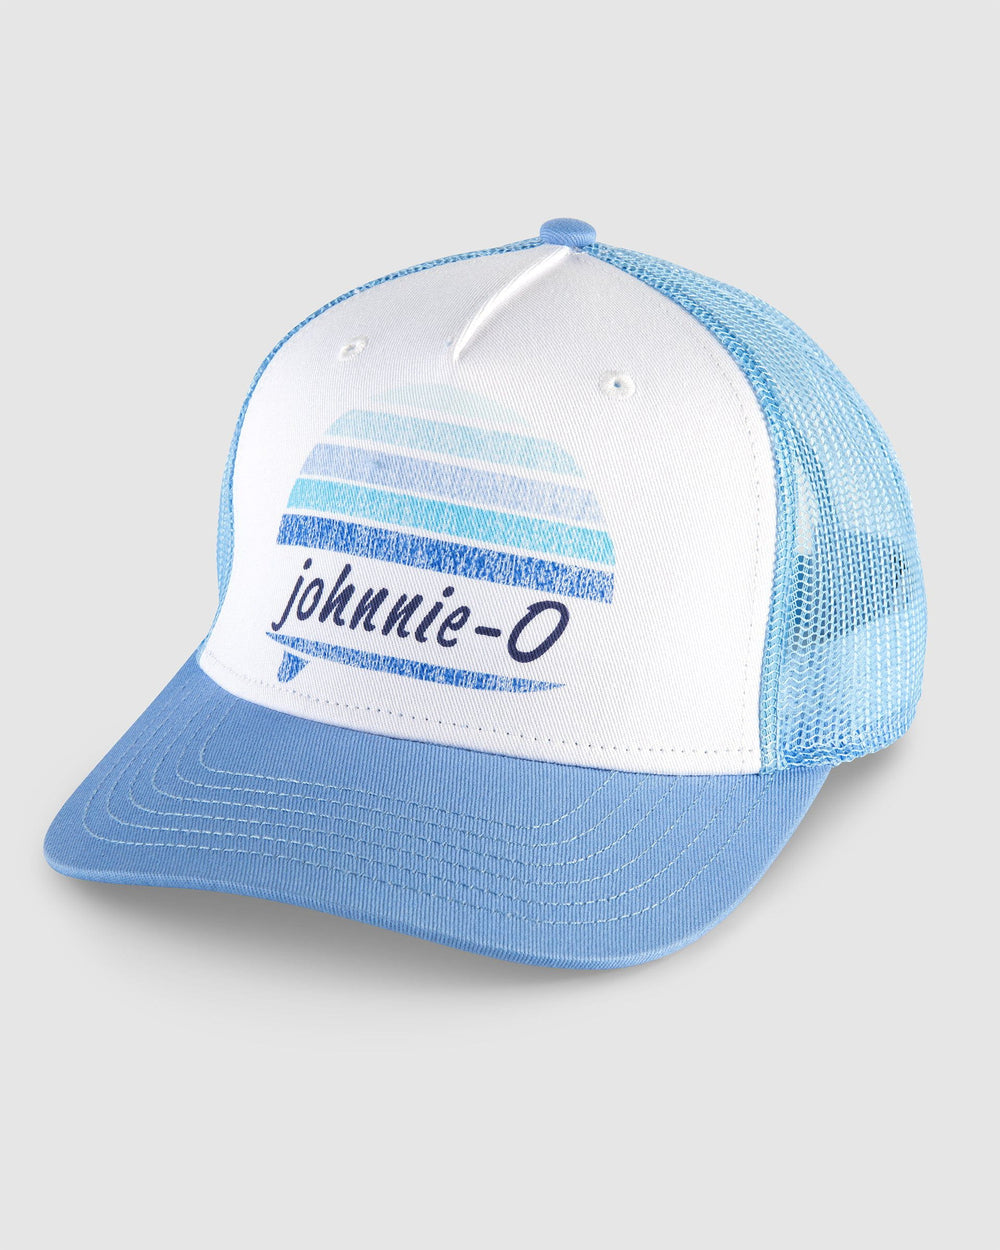 Johnnie-O Boardset Trucker Hat Accessories Johnnie-O Maliblu  